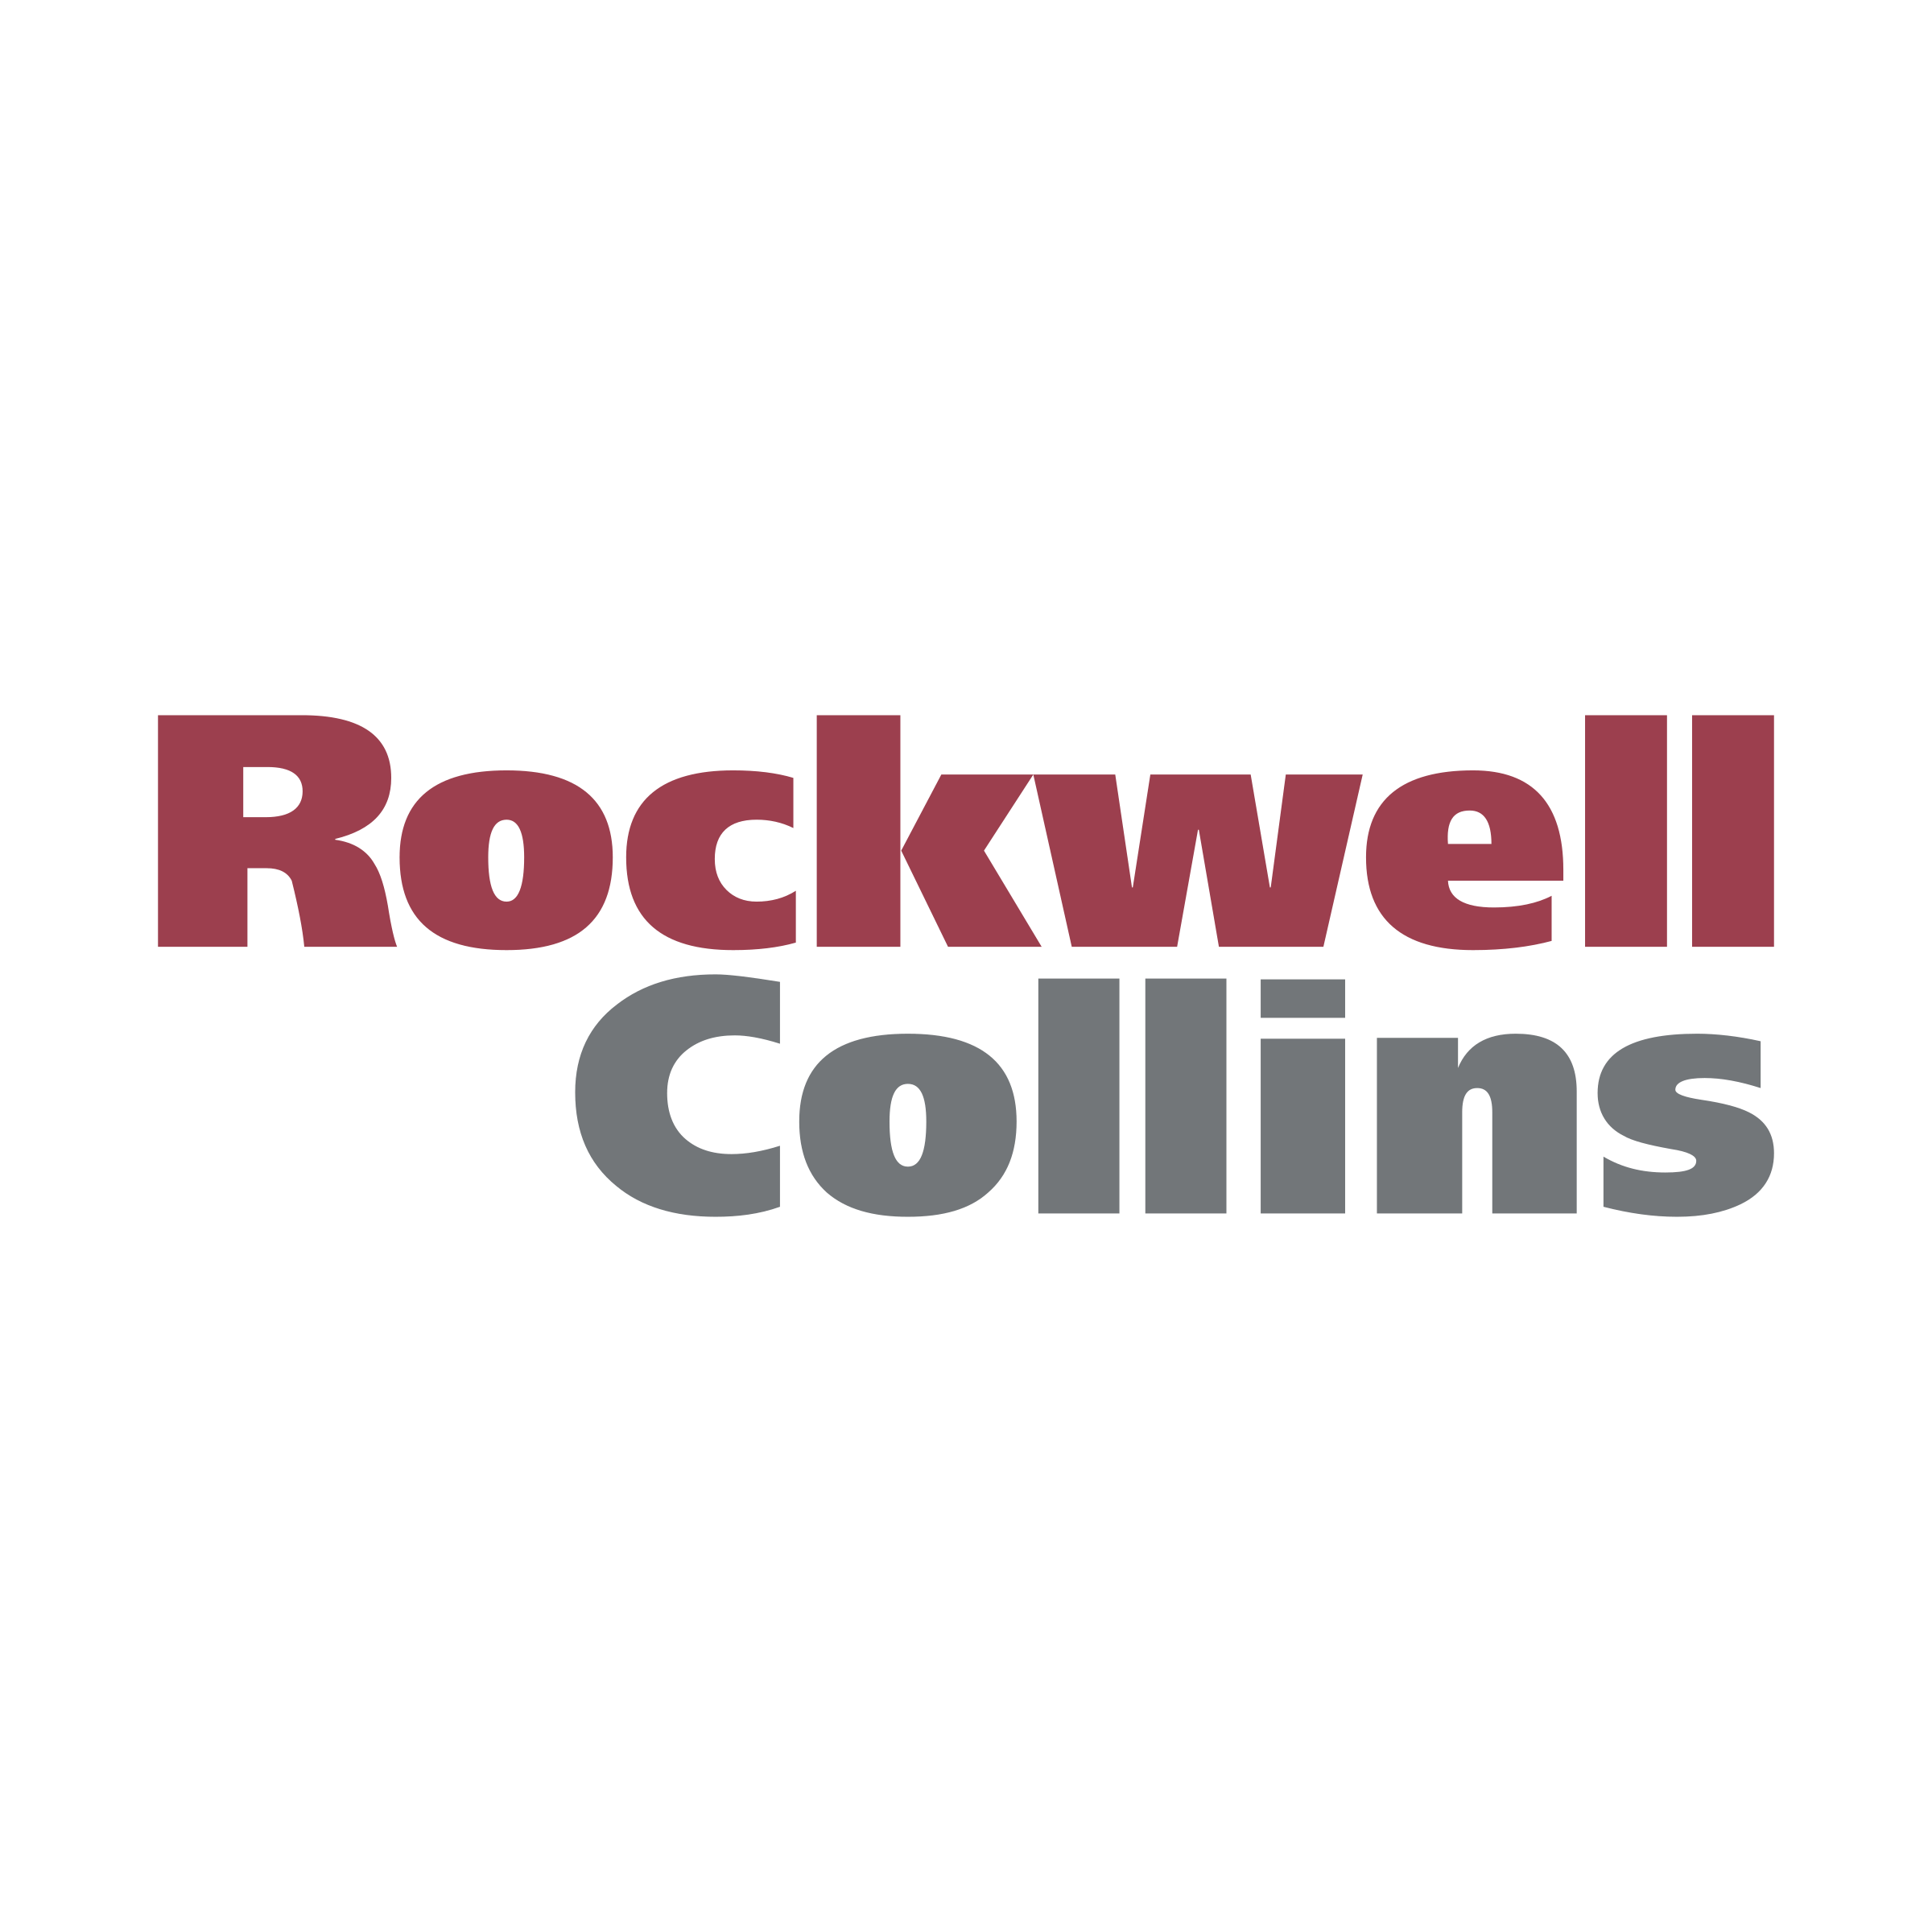 The Collins Logo - Rockwell Collins Logo PNG Transparent & SVG Vector